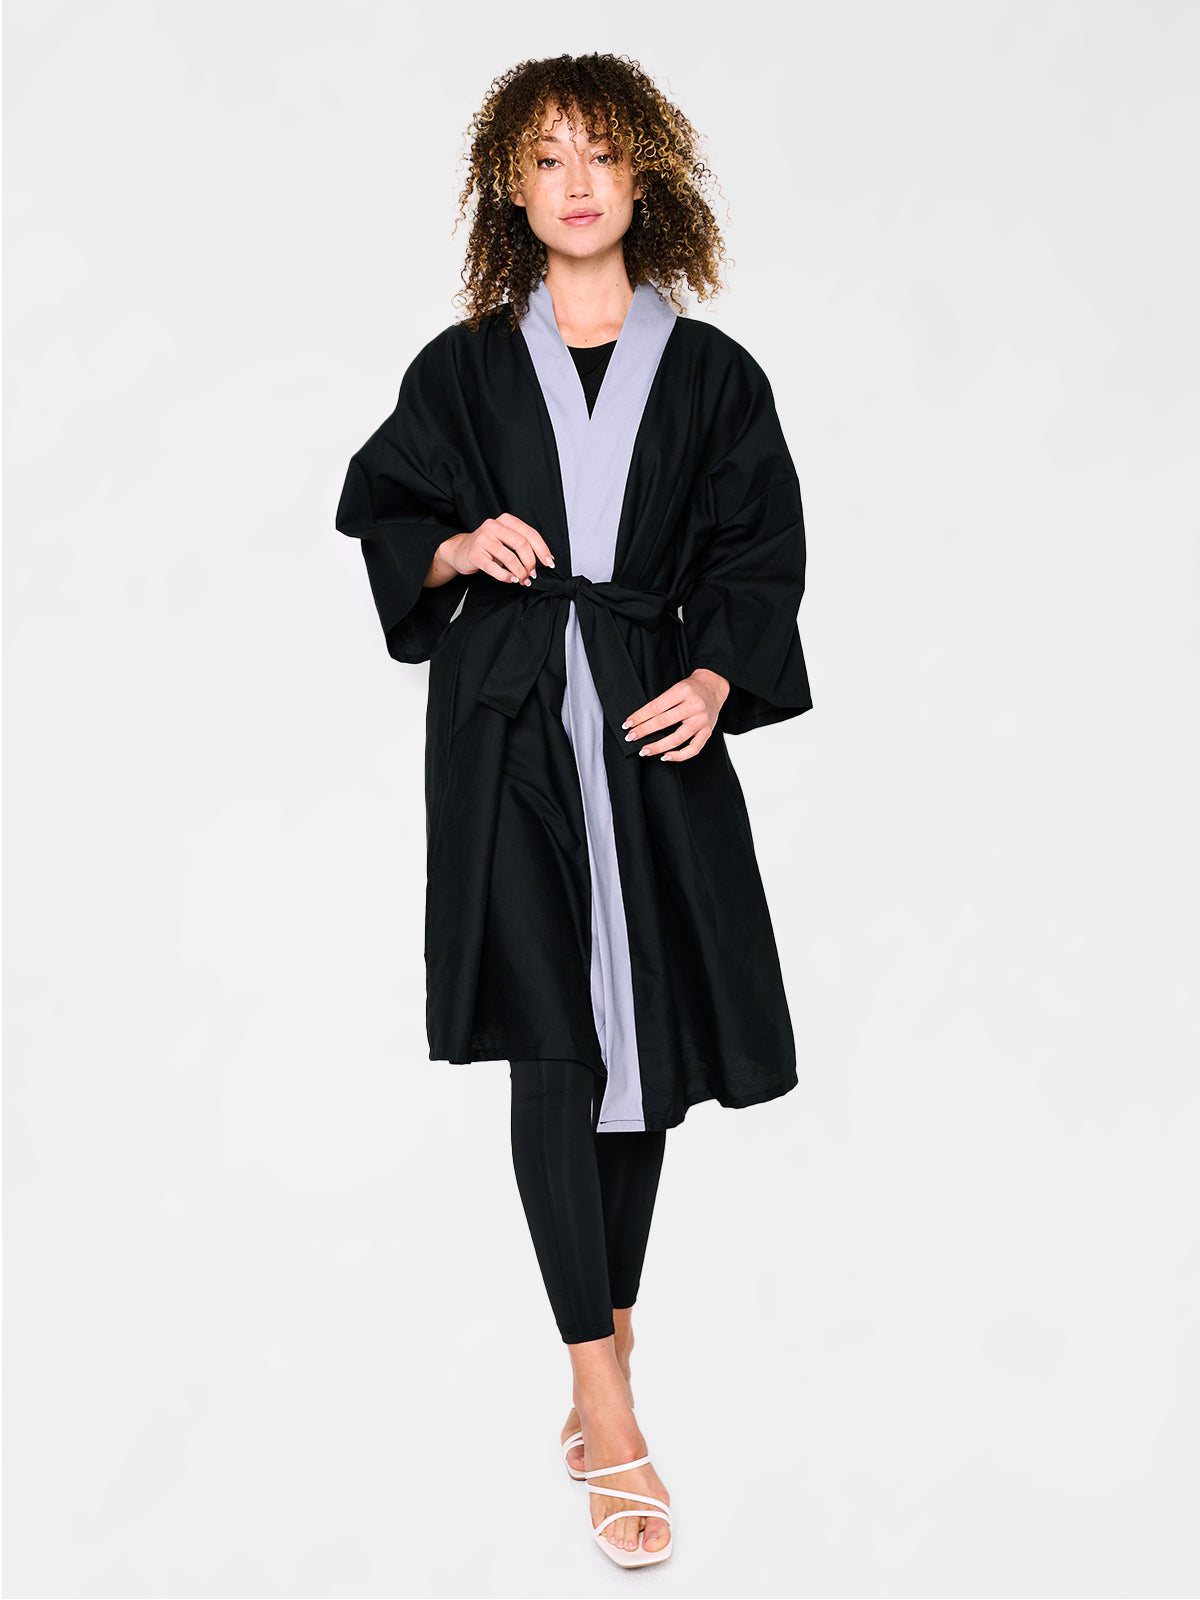 Big News Client Wrap | Salon Robe